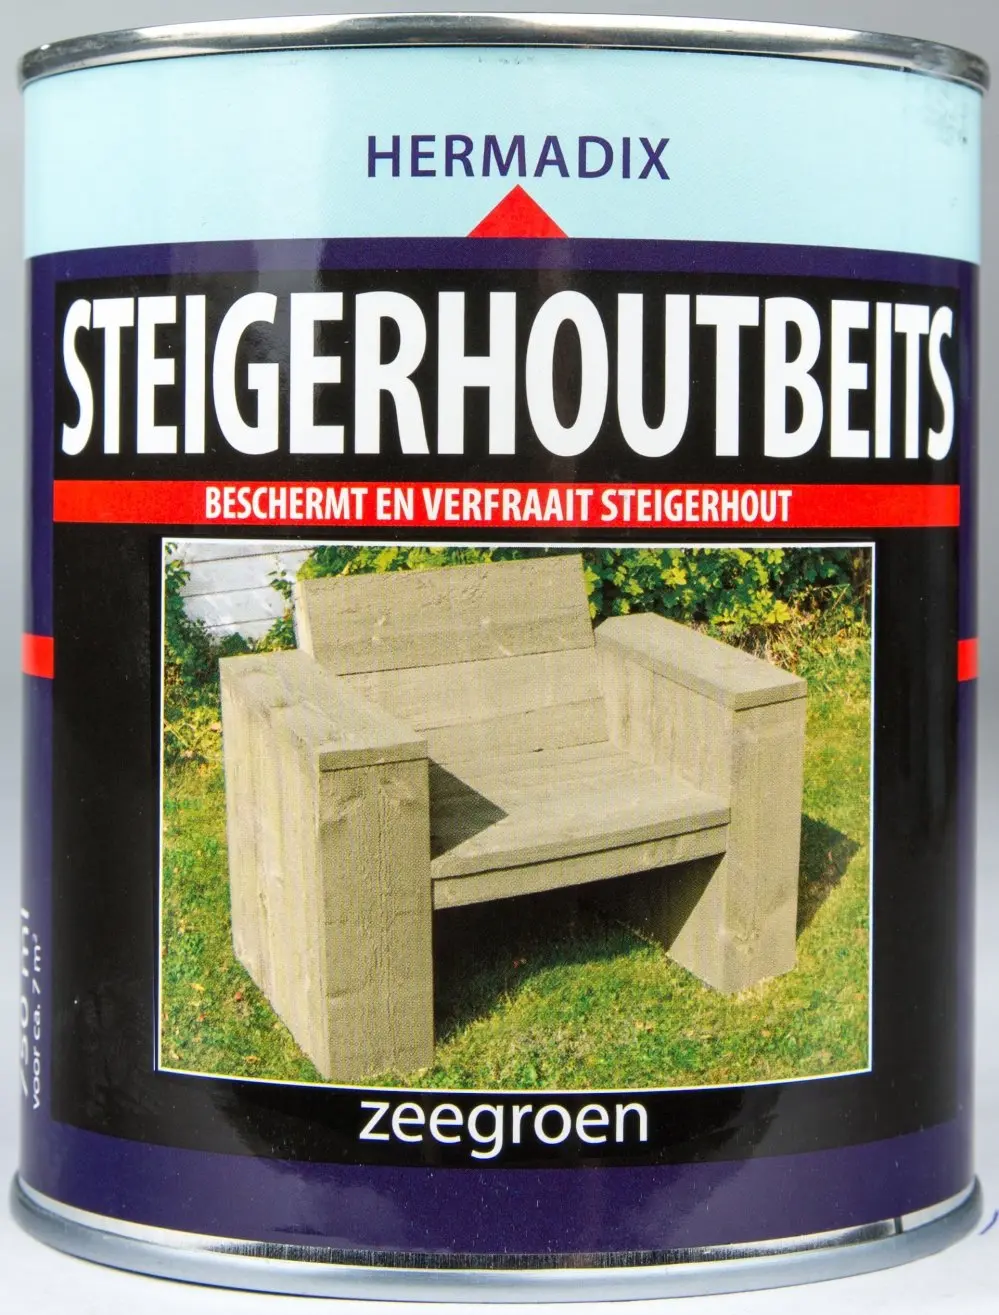 Steigerhoutbeits - hermadix-steigerhoutbeits,%20zeegroen,0,75l-verfcompleet